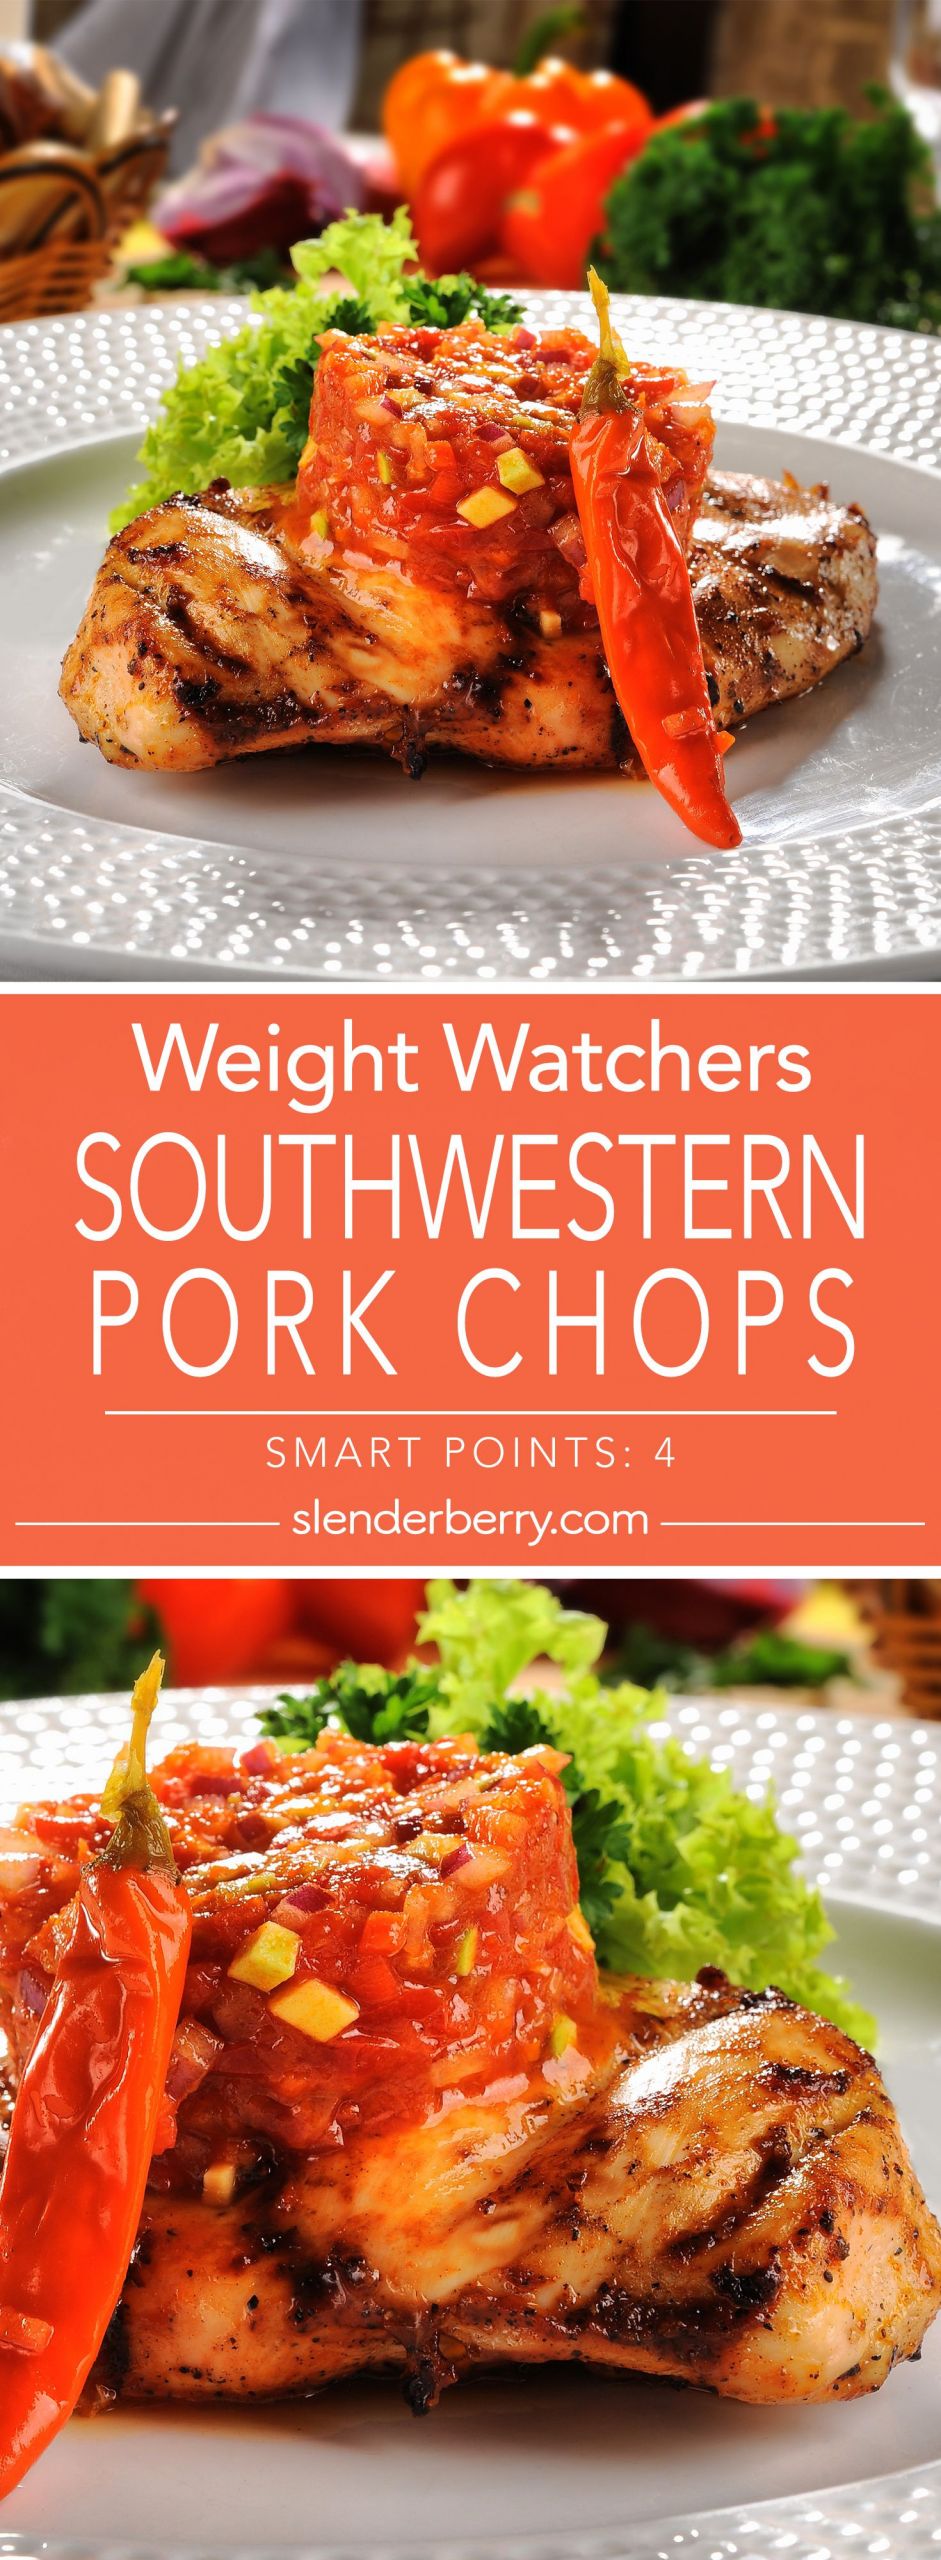 Low Calorie Pork Chop Recipes
 Southwestern Pork Chops Recipe